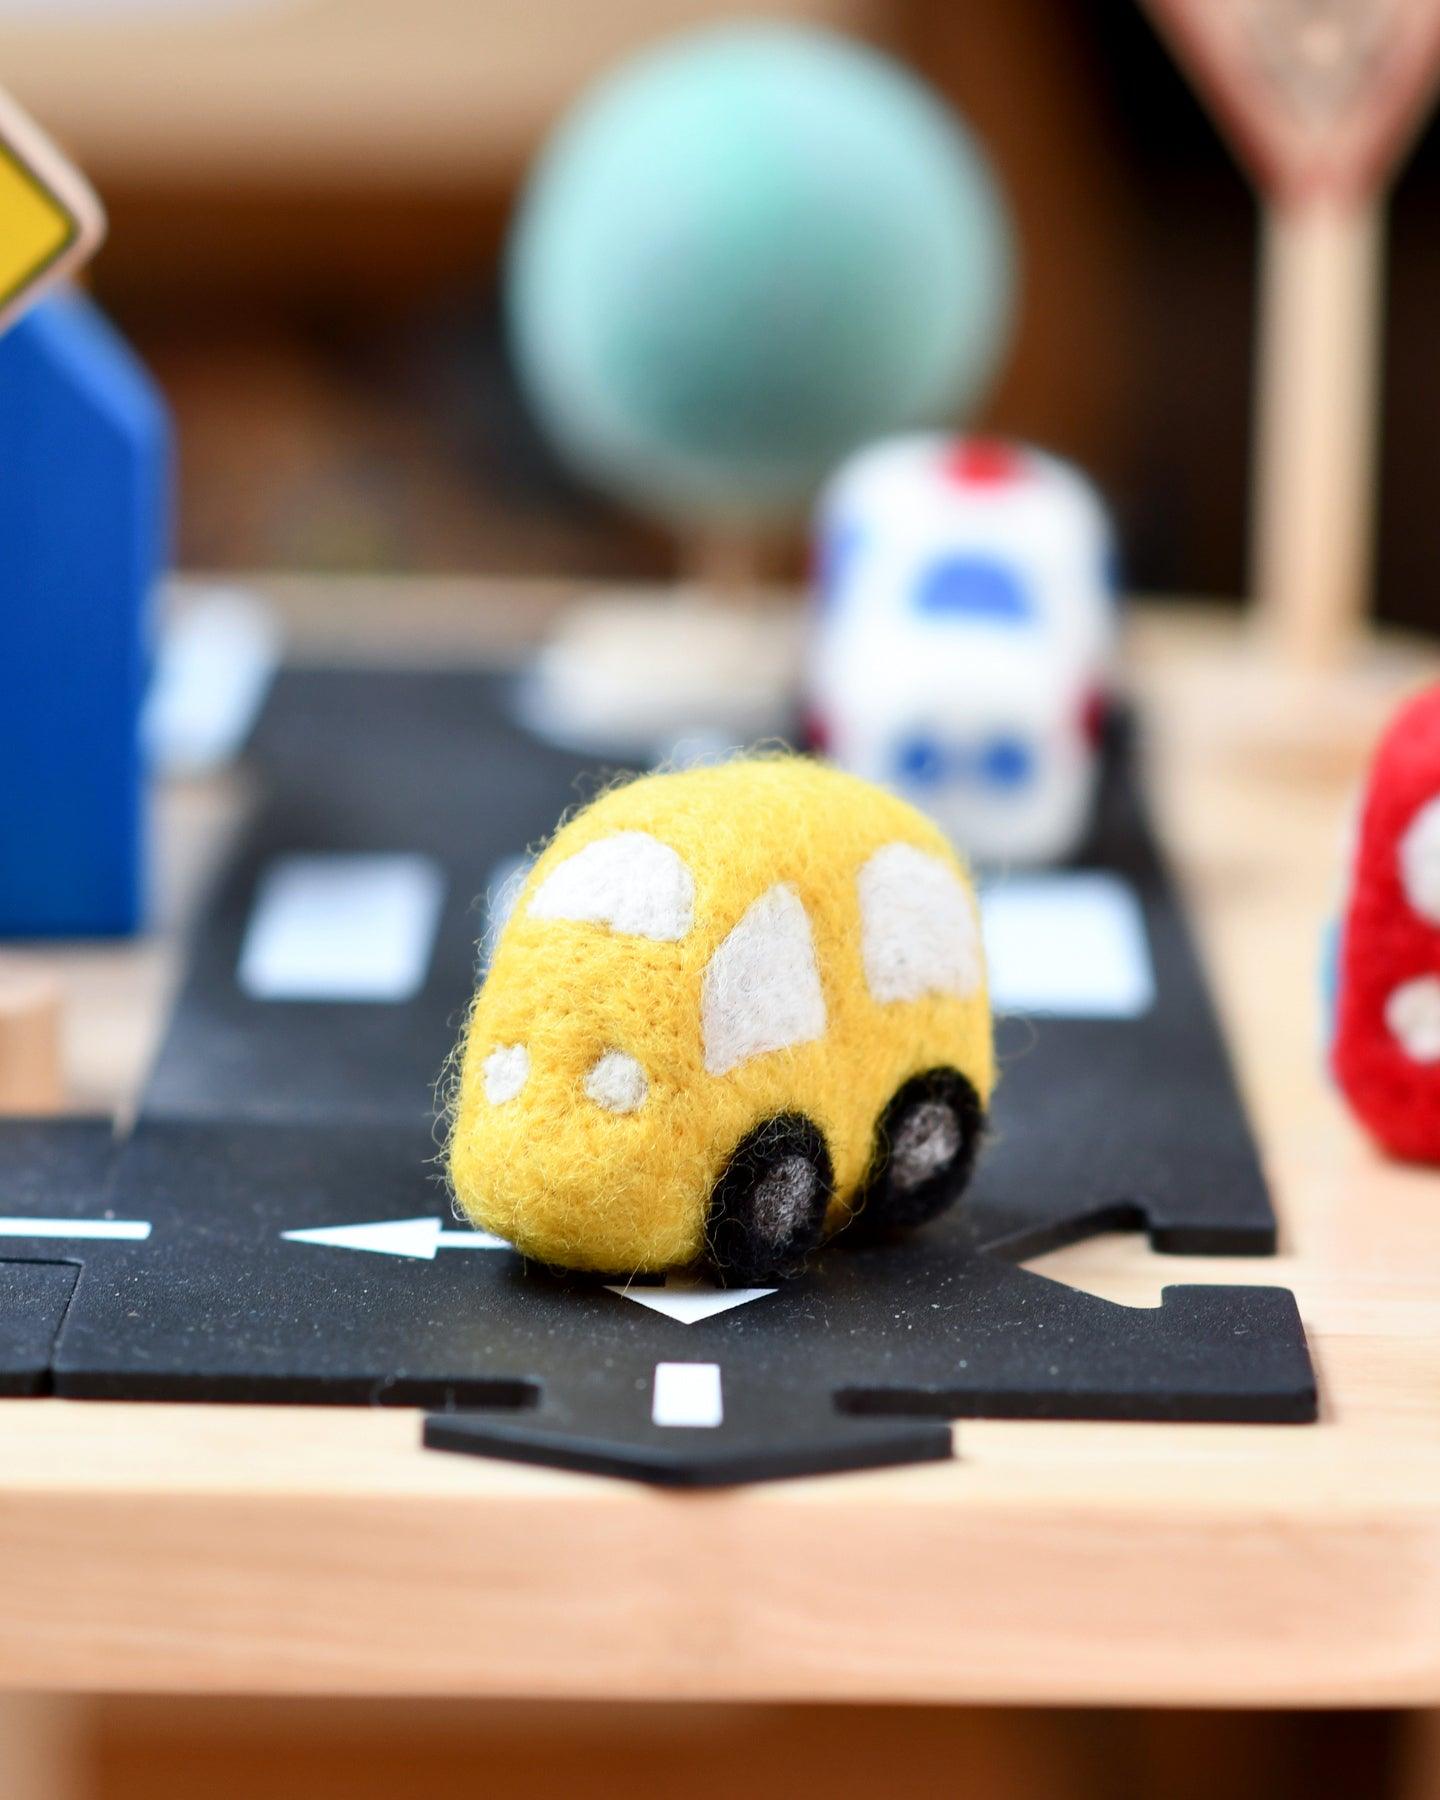 Felt Yellow Taxi Toy - Tara Treasures